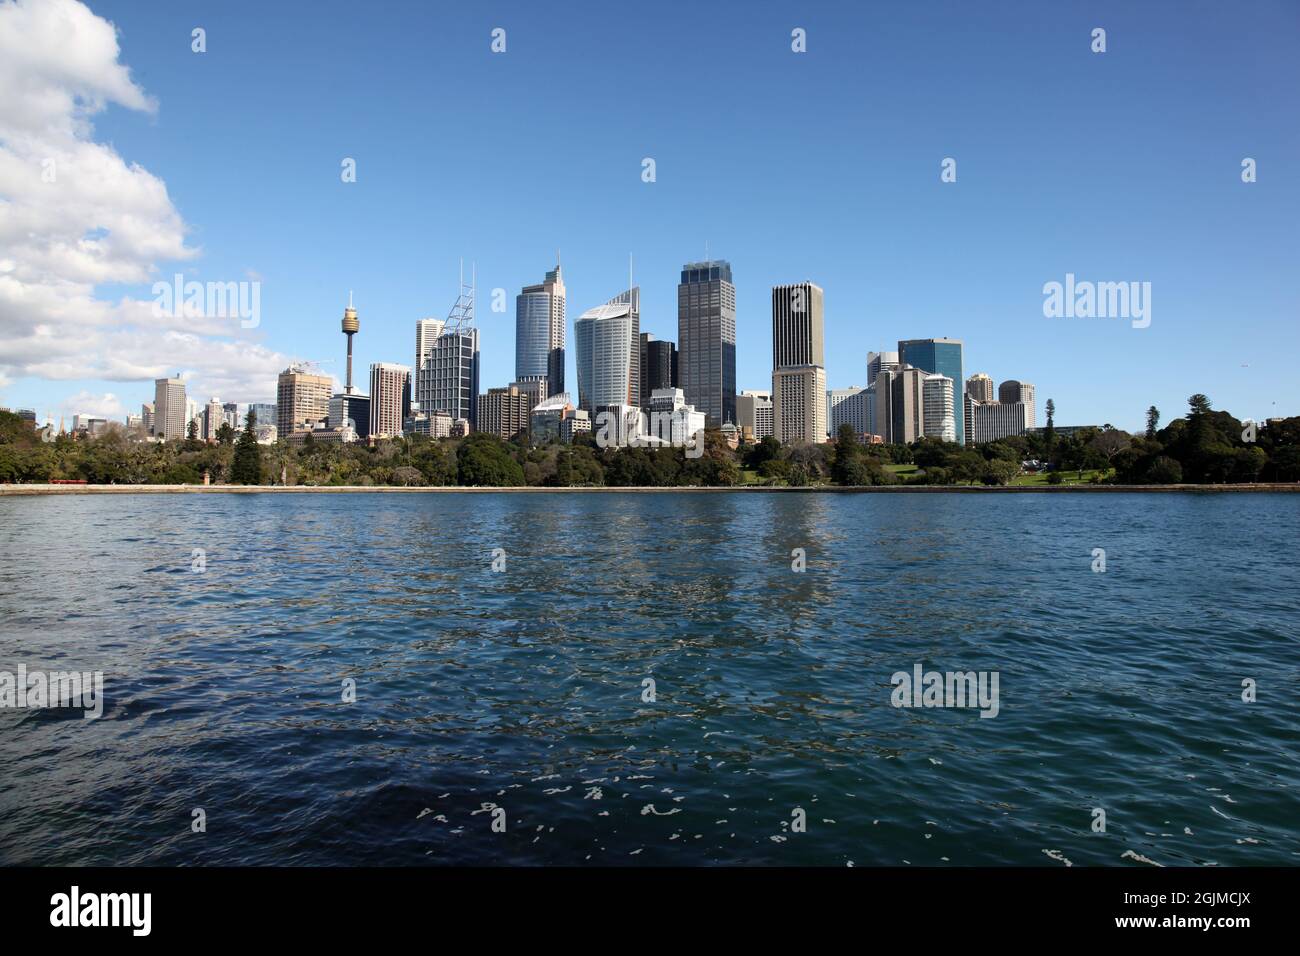 Sydney City Skyline view across farm cove. Sydney is Australia's largest city and a popular tourist destination. Stock Photo